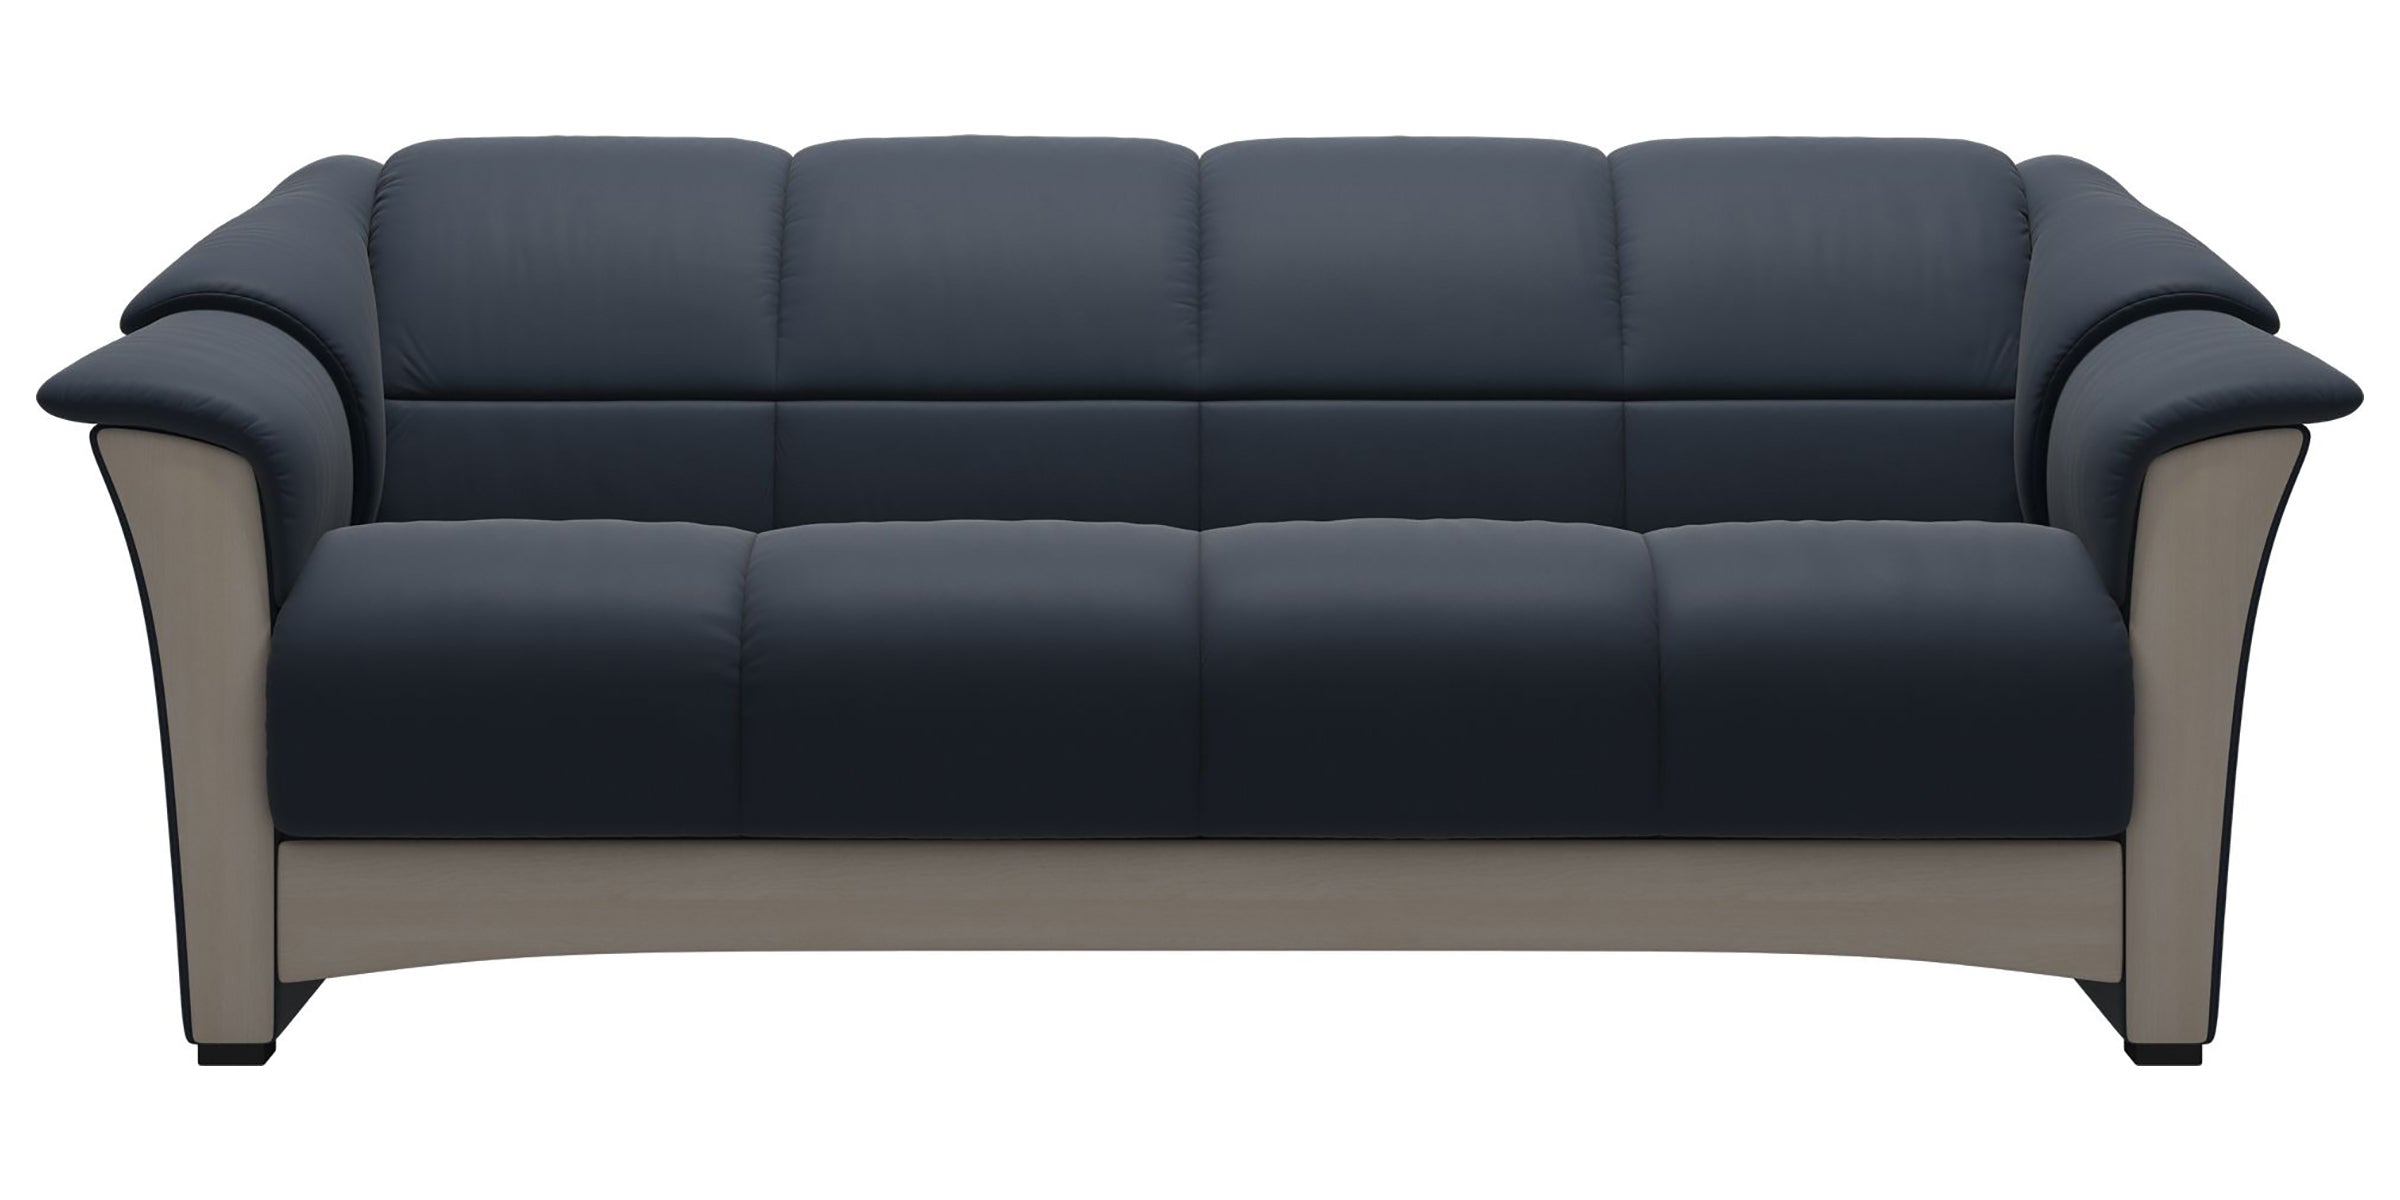 Paloma Leather Oxford Blue and Whitewash Base | Stressless Oslo Sofa | Valley Ridge Furniture